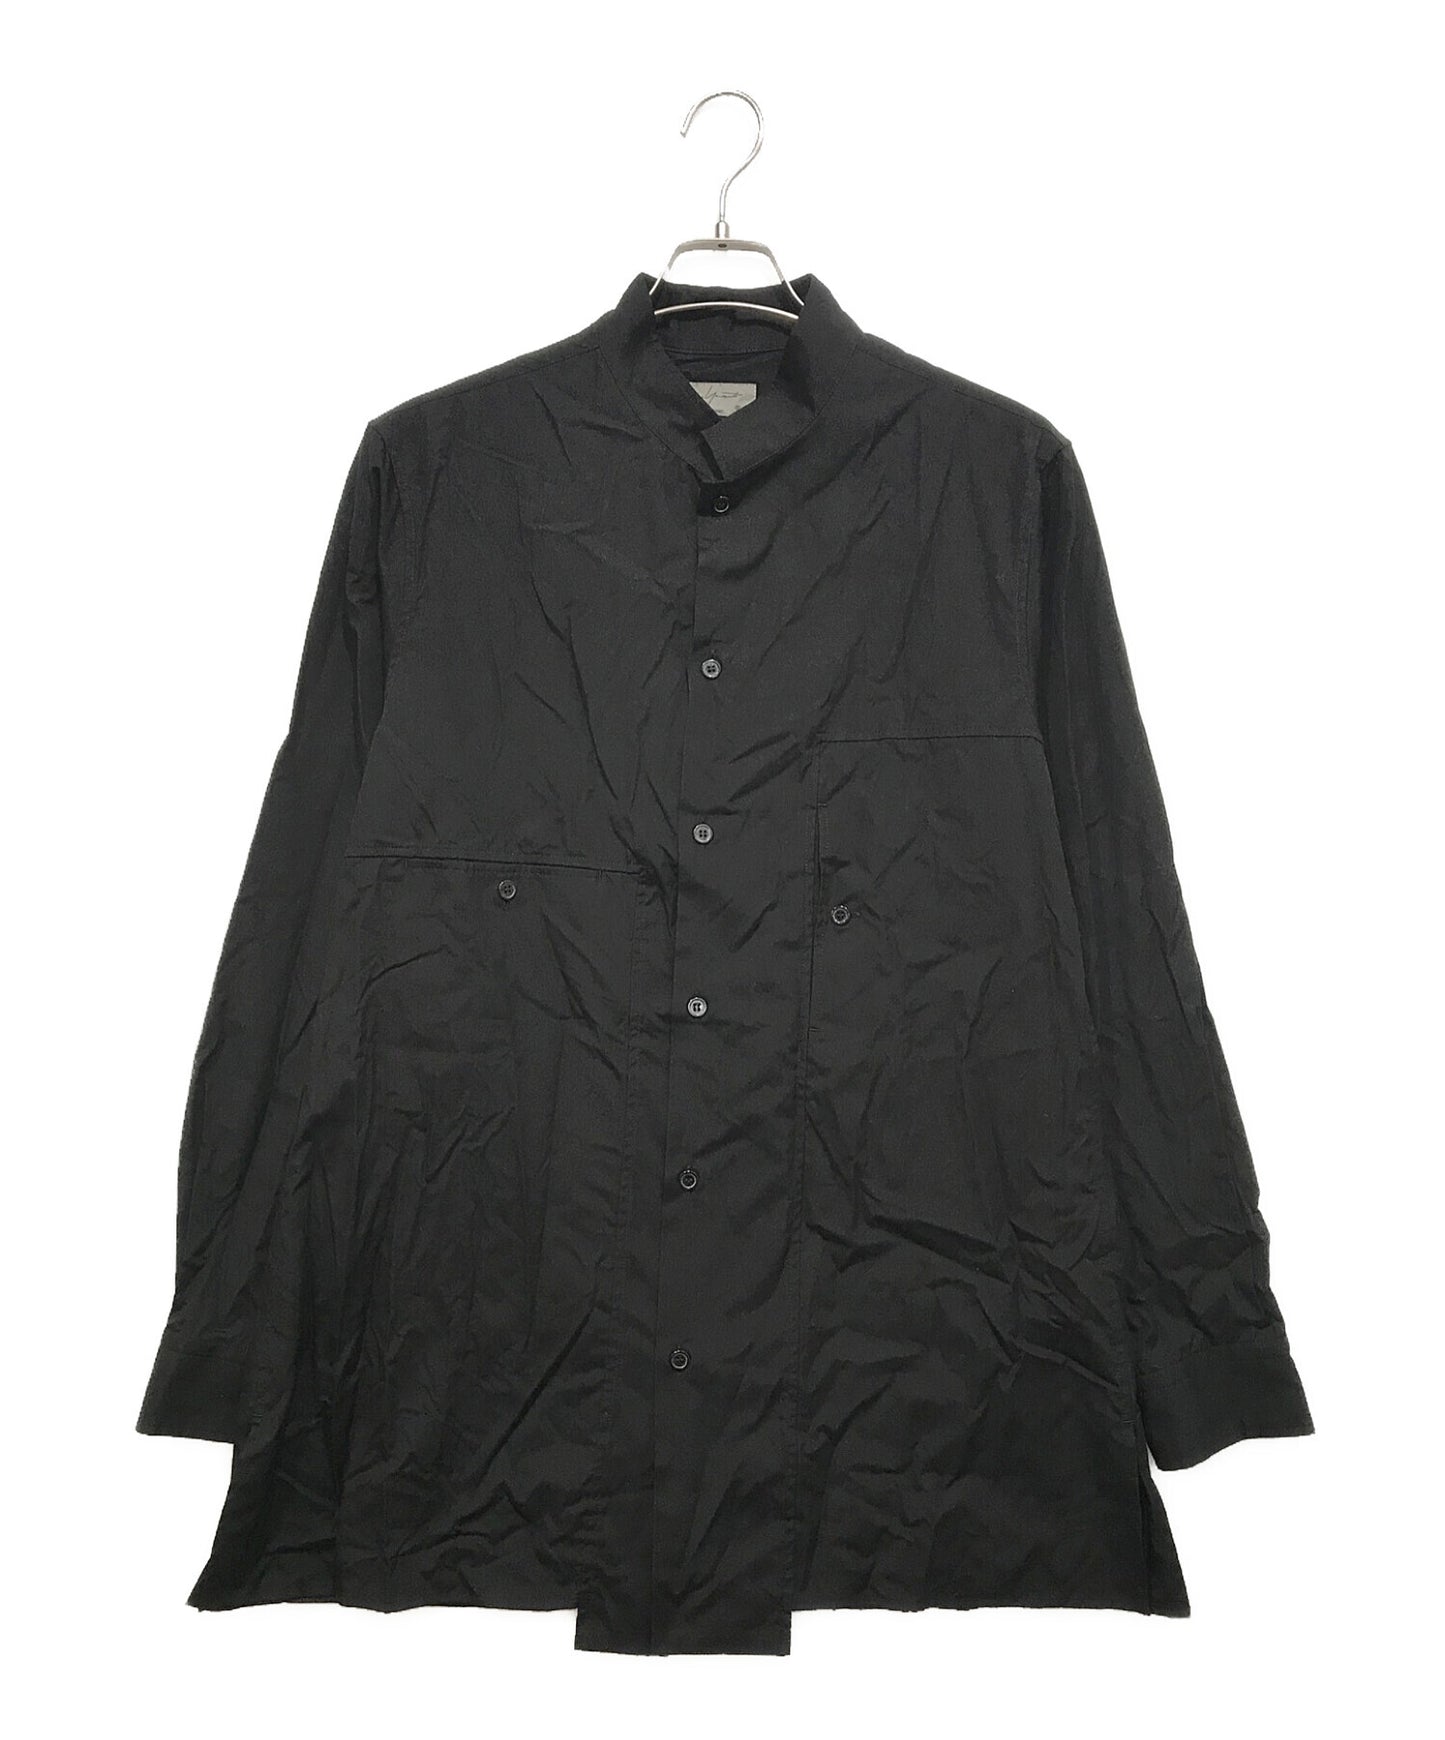 Yohji Yamamoto pour homme stand-up collar shirt HR-B20-053